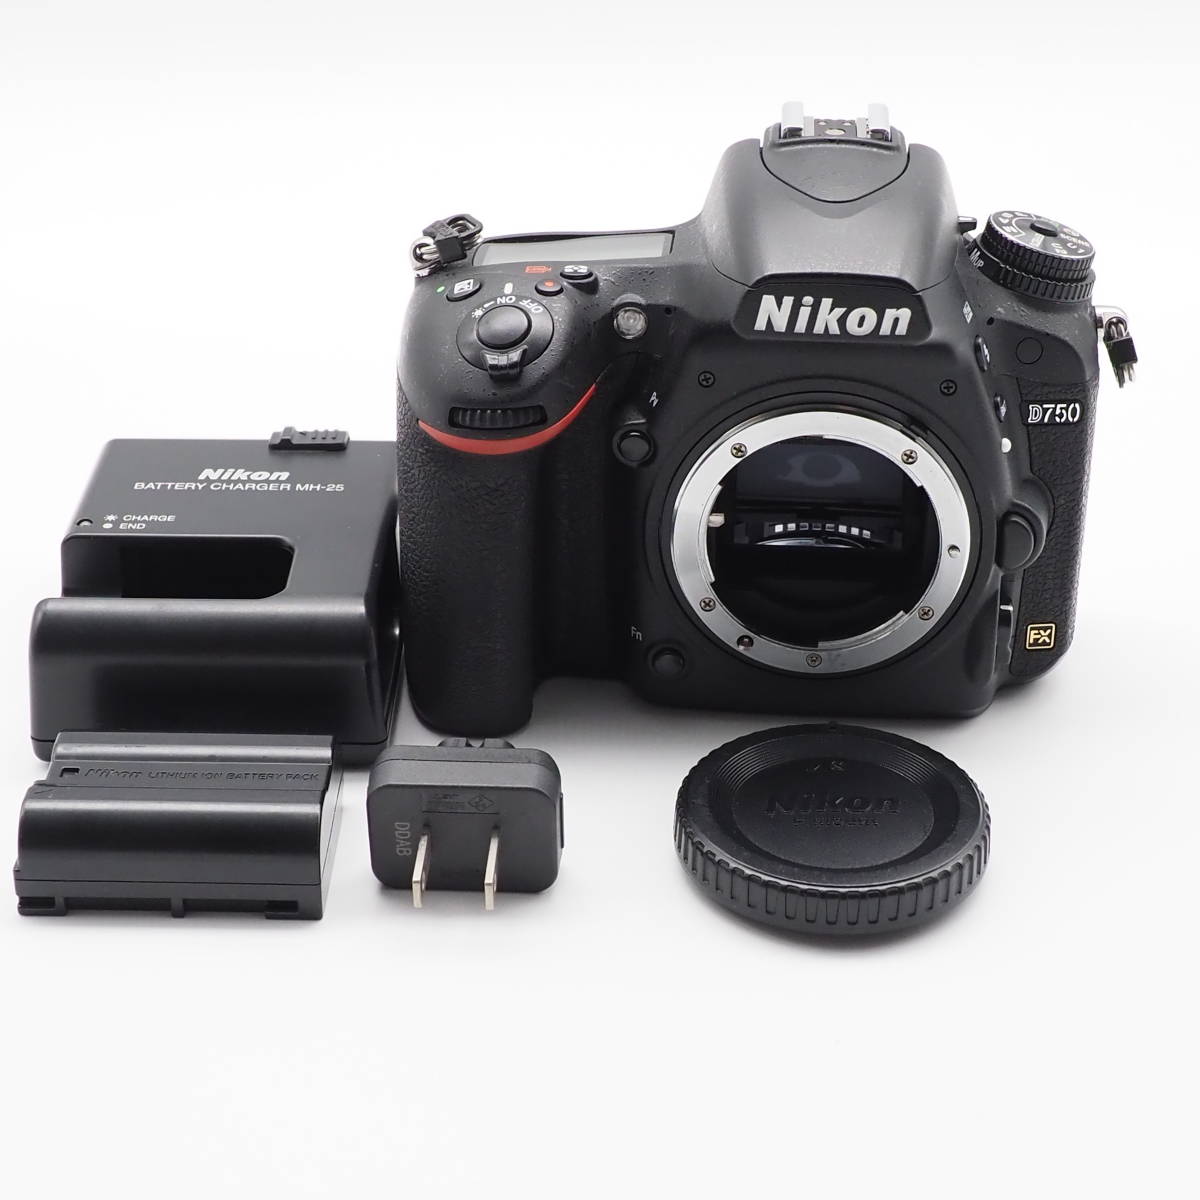 Nikon D750 ショット数9961 使用頻度の少ない美品です dallascompany.rs